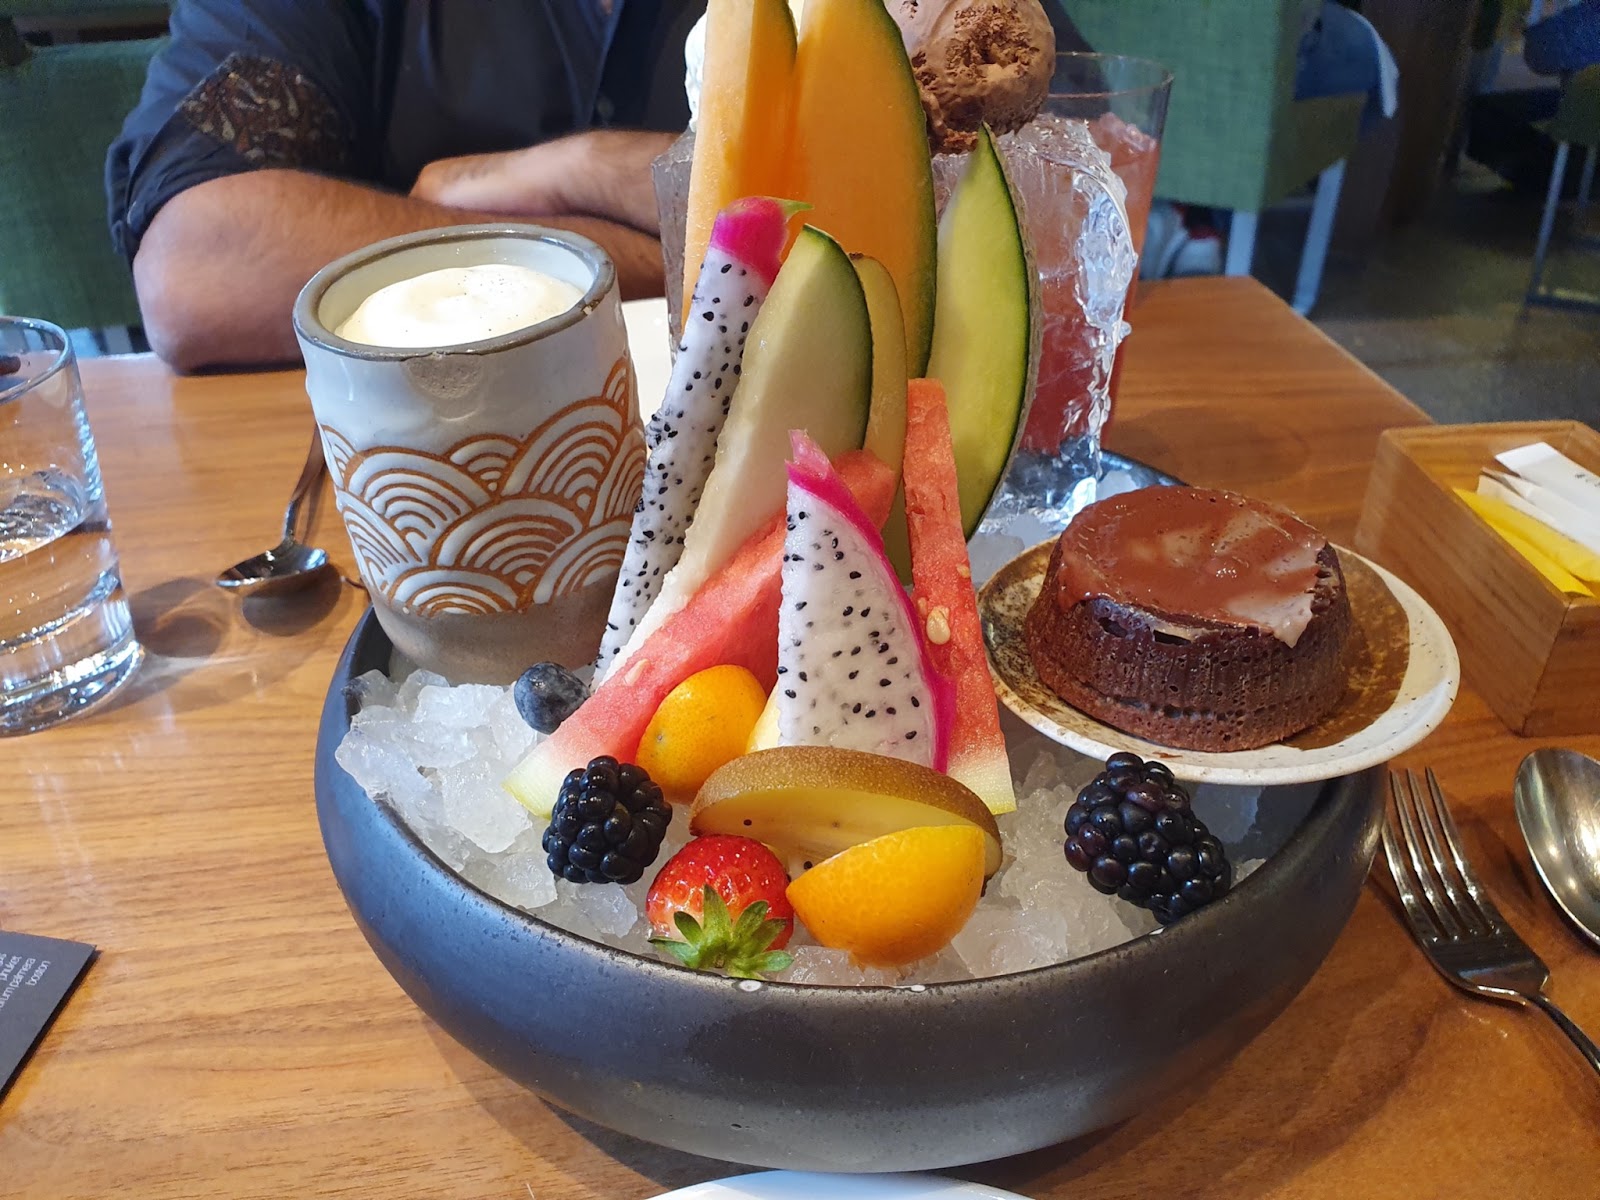 fruit platter with ice cream and yogurt parfait